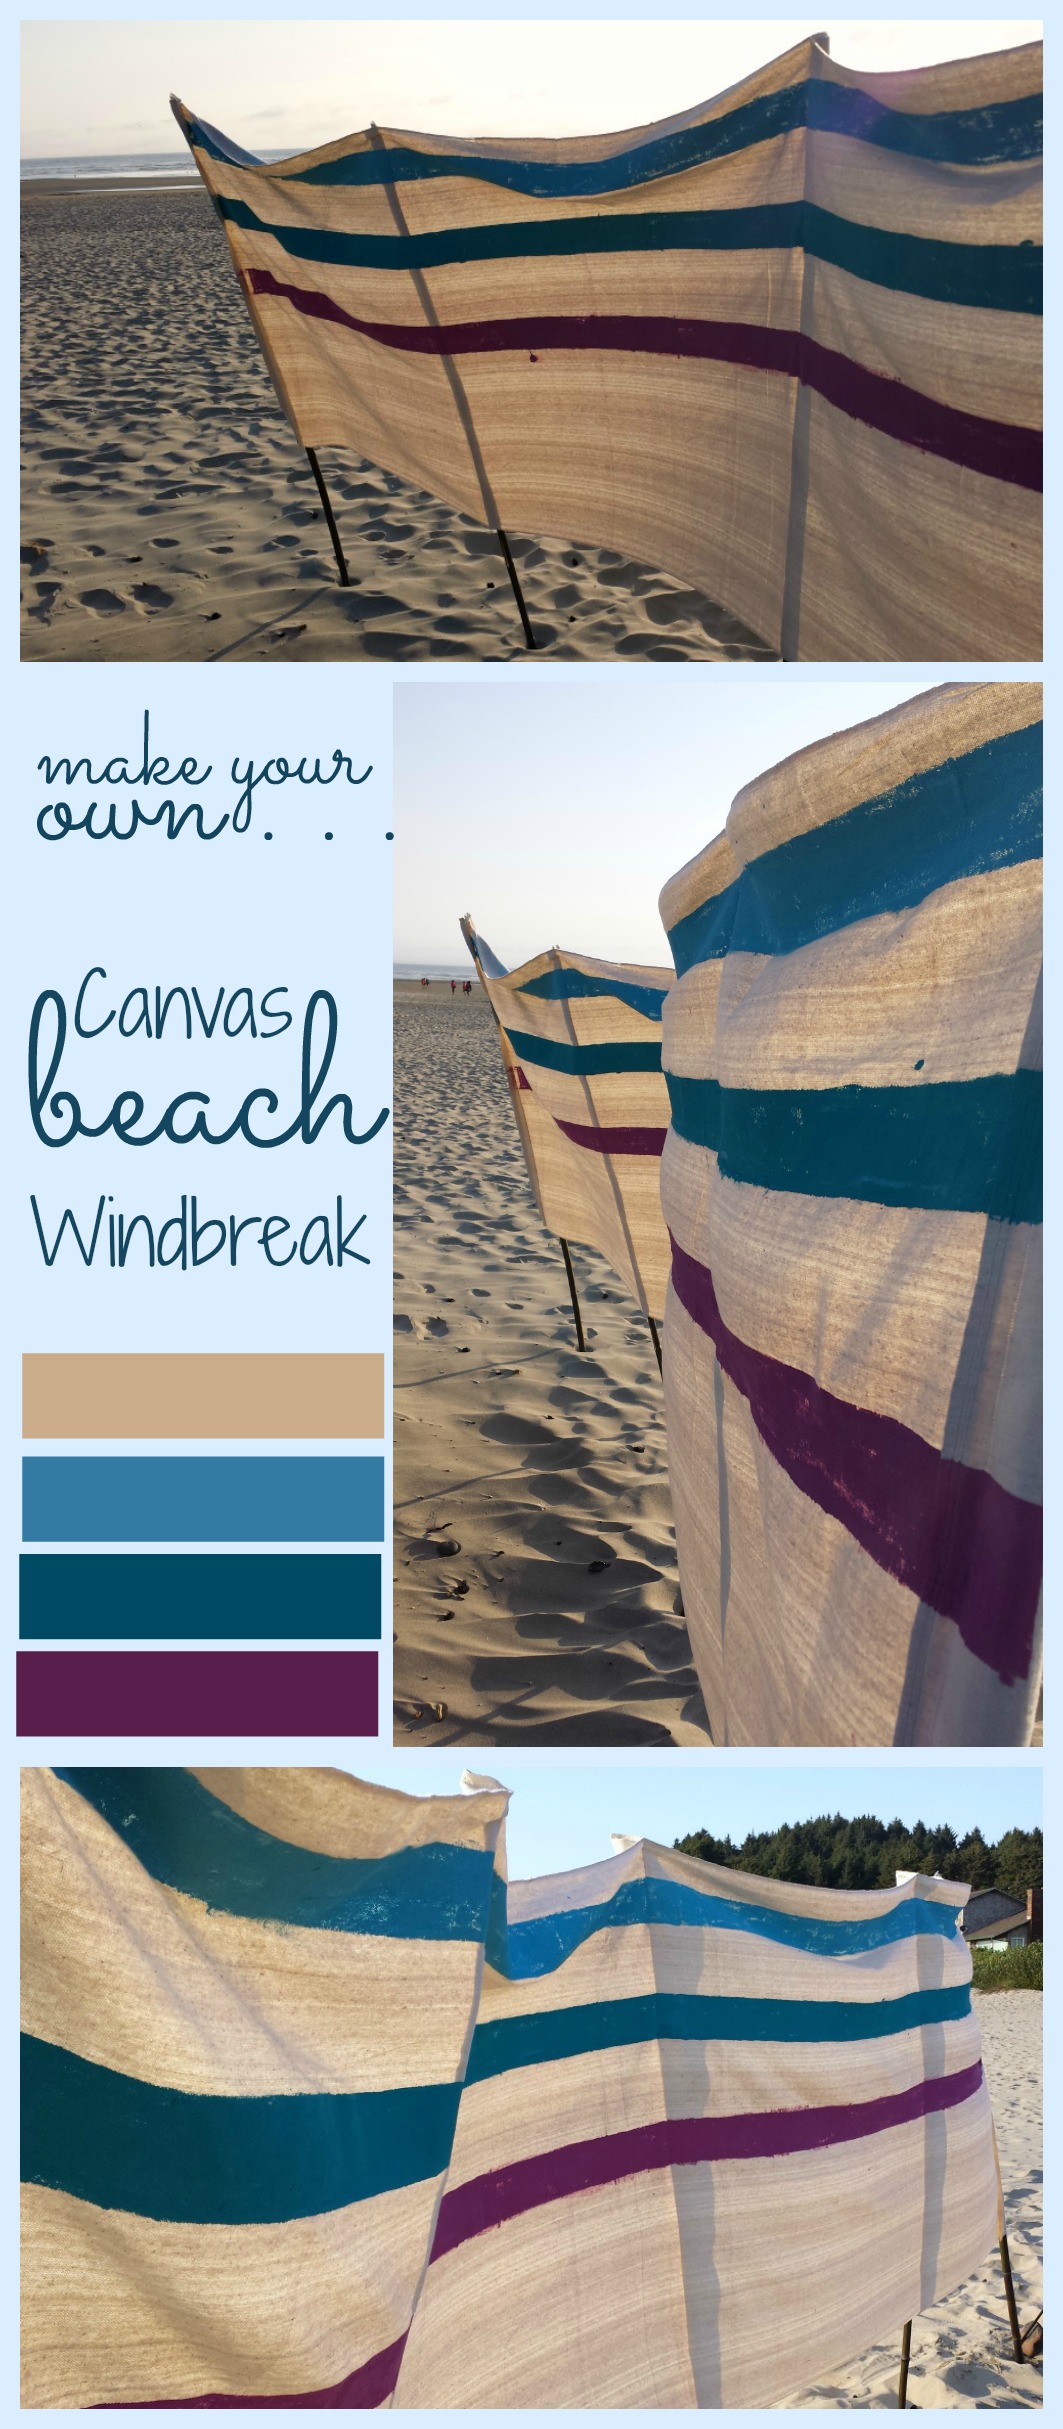  lag din egen canvas beach windbreak